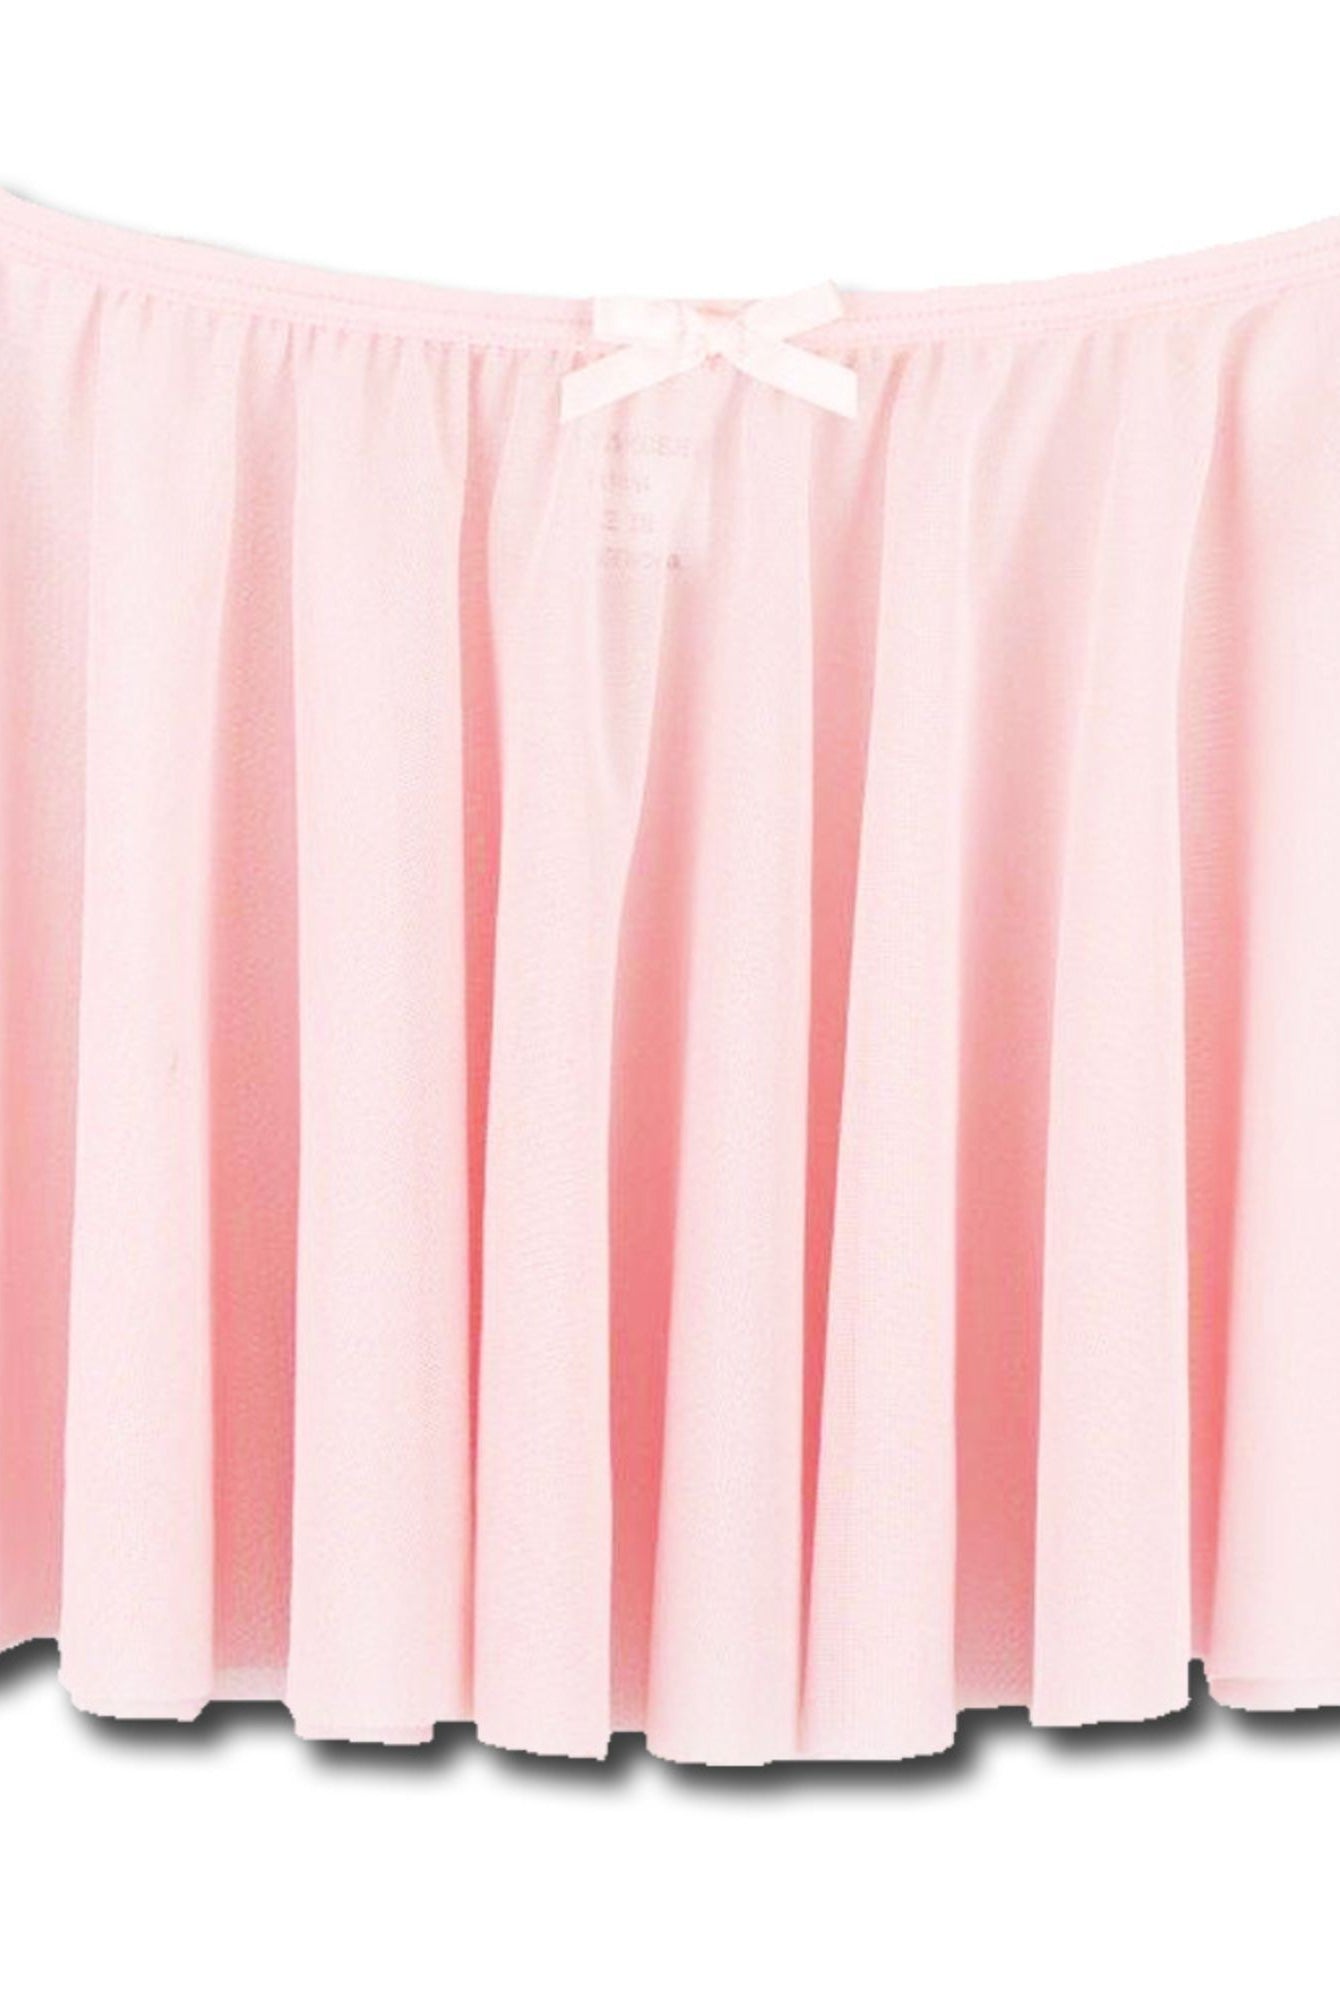 TYVM 44648 Dance Skirt Soft Mesh Pink